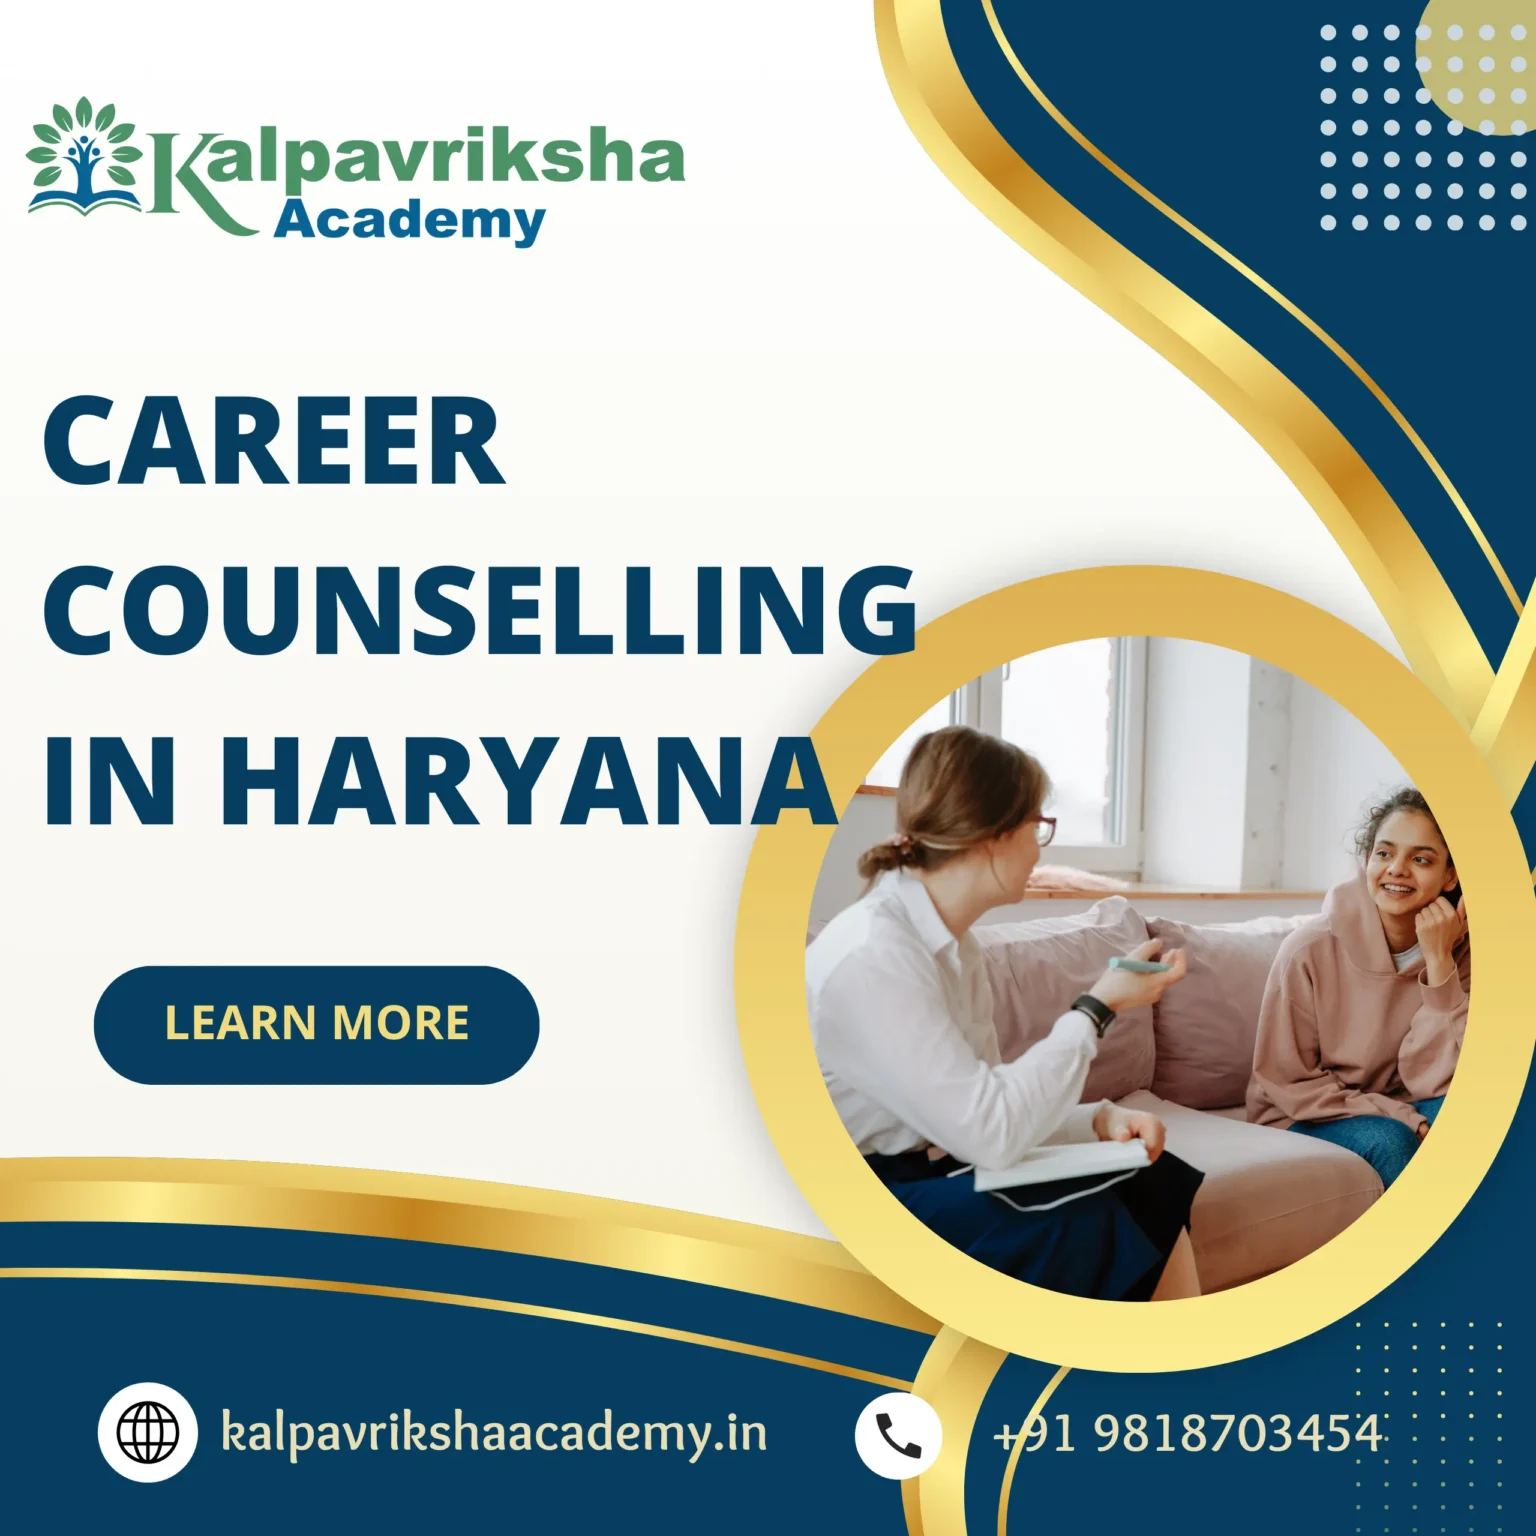 Online Career Counselling in Haryana - Kalpavriksha Academy